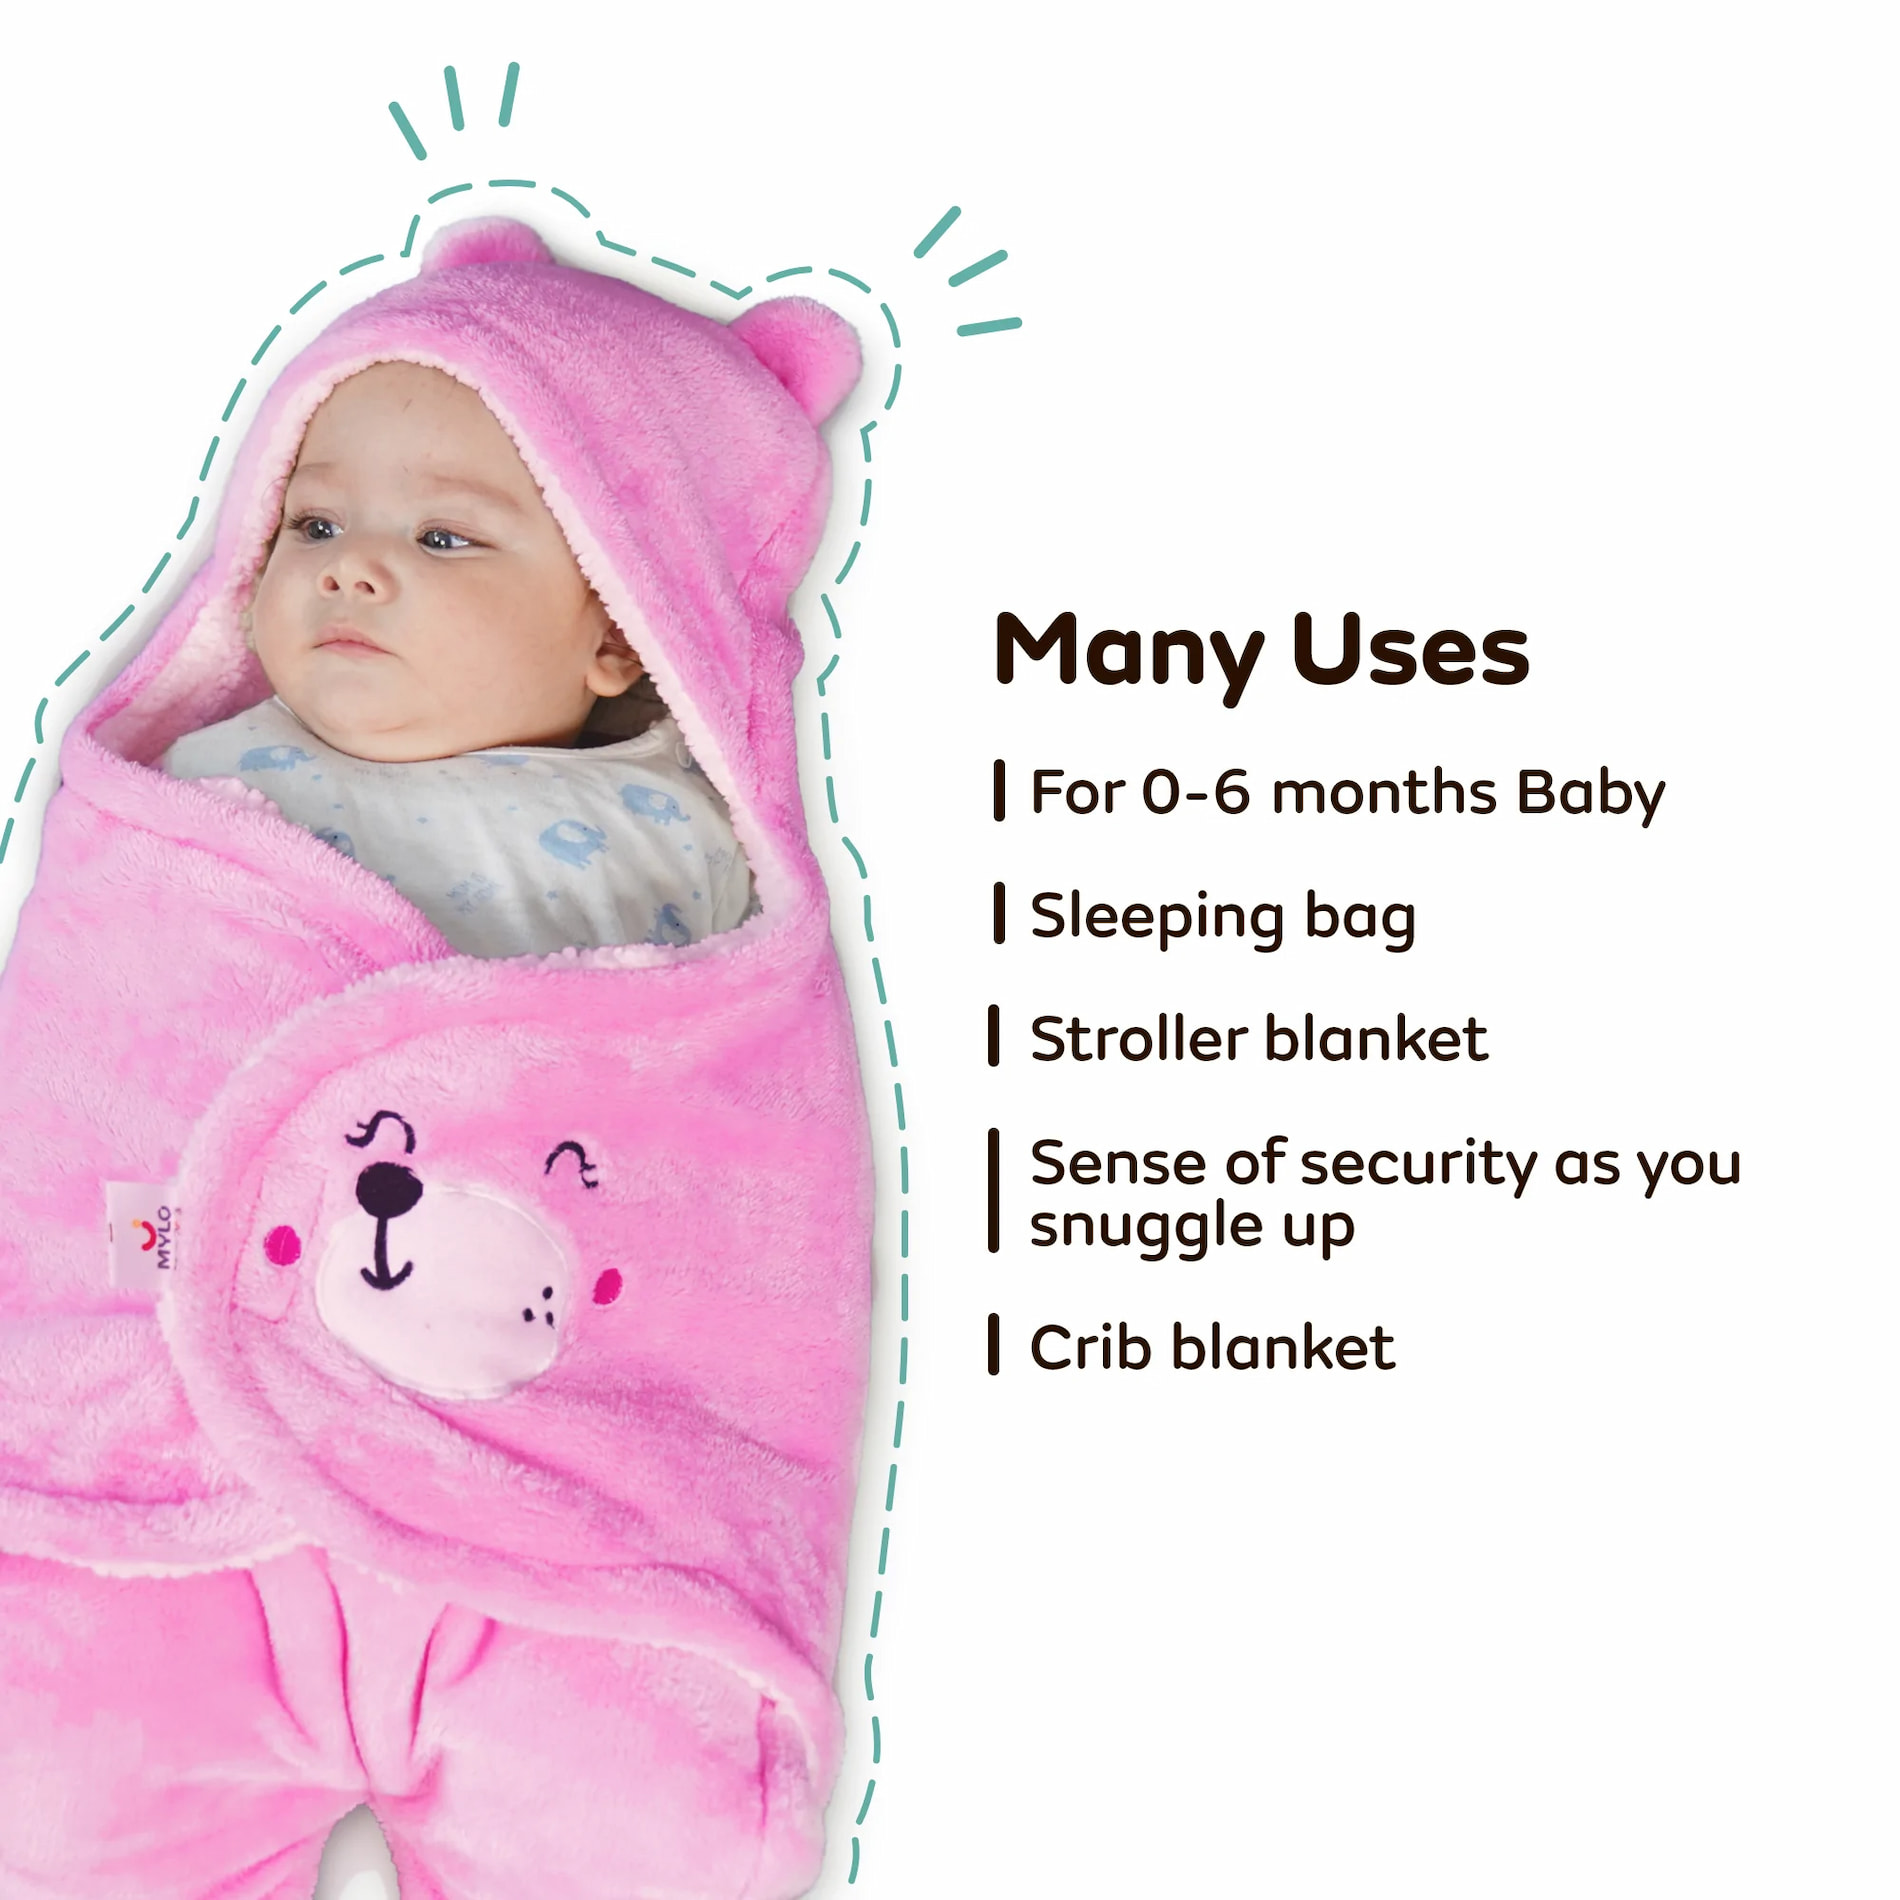 Mylo Ultra-soft Cute Baby Swaddling Wrapper, Sleeping Bag cum All season Ac Blanket (0-6 Months) - Light Pink + Light Brown + Mint Green